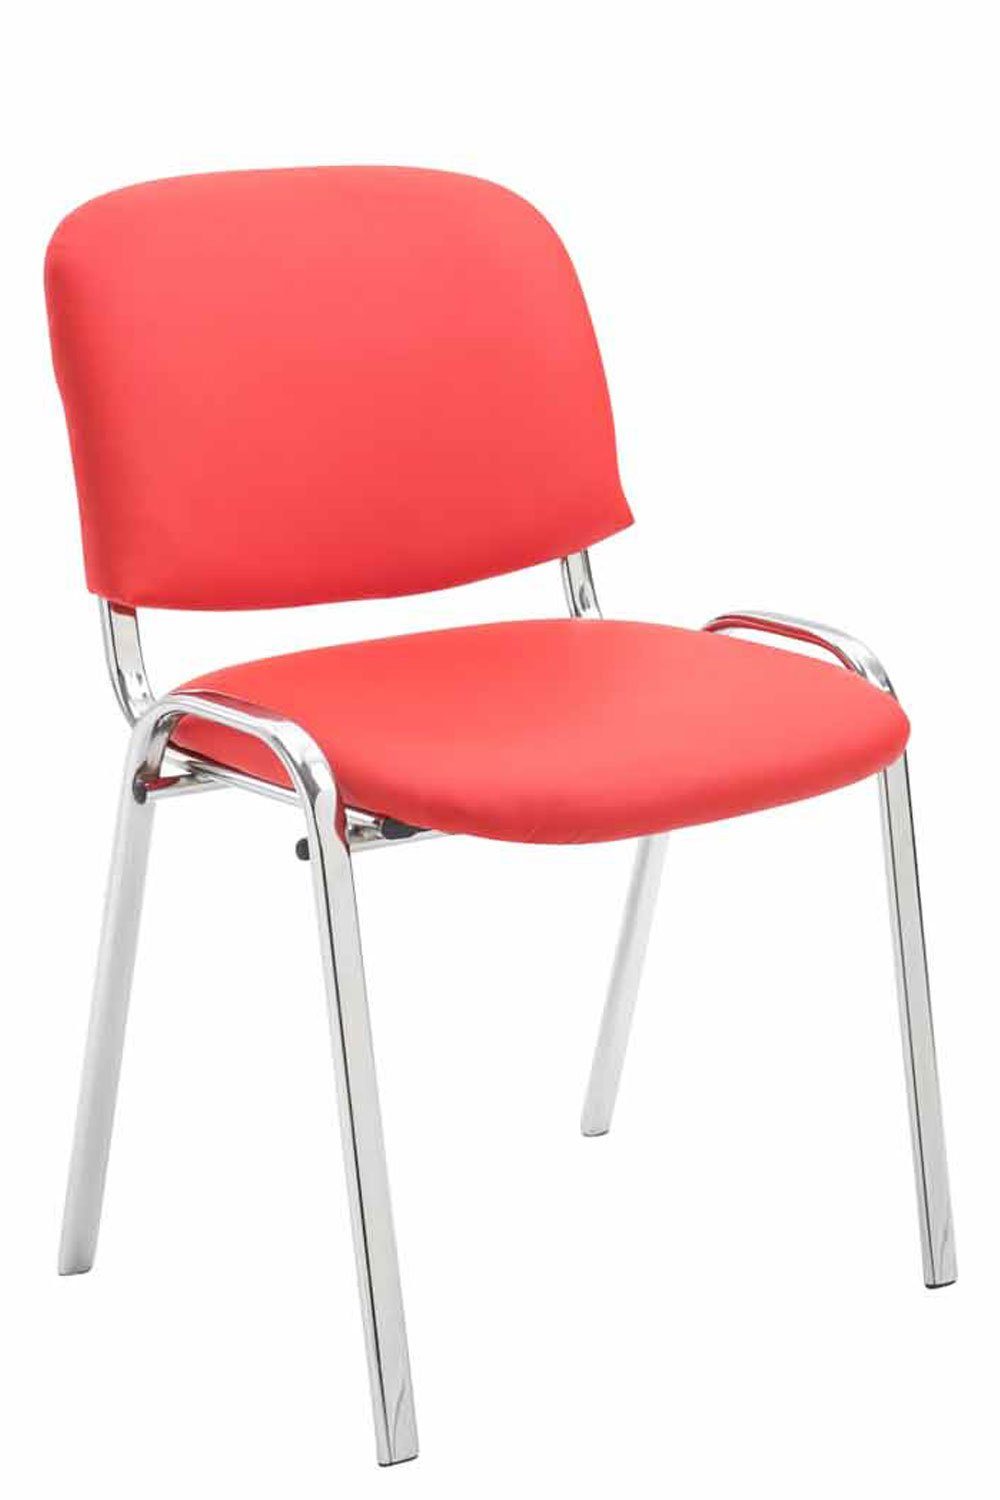 Kunstleder Besucherstuhl Metall - Polsterung Warteraumstuhl TPFLiving Gestell: Sitzfläche: hochwertiger rot - Konferenzstuhl (Besprechungsstuhl - Keen mit chrom - Messestuhl),